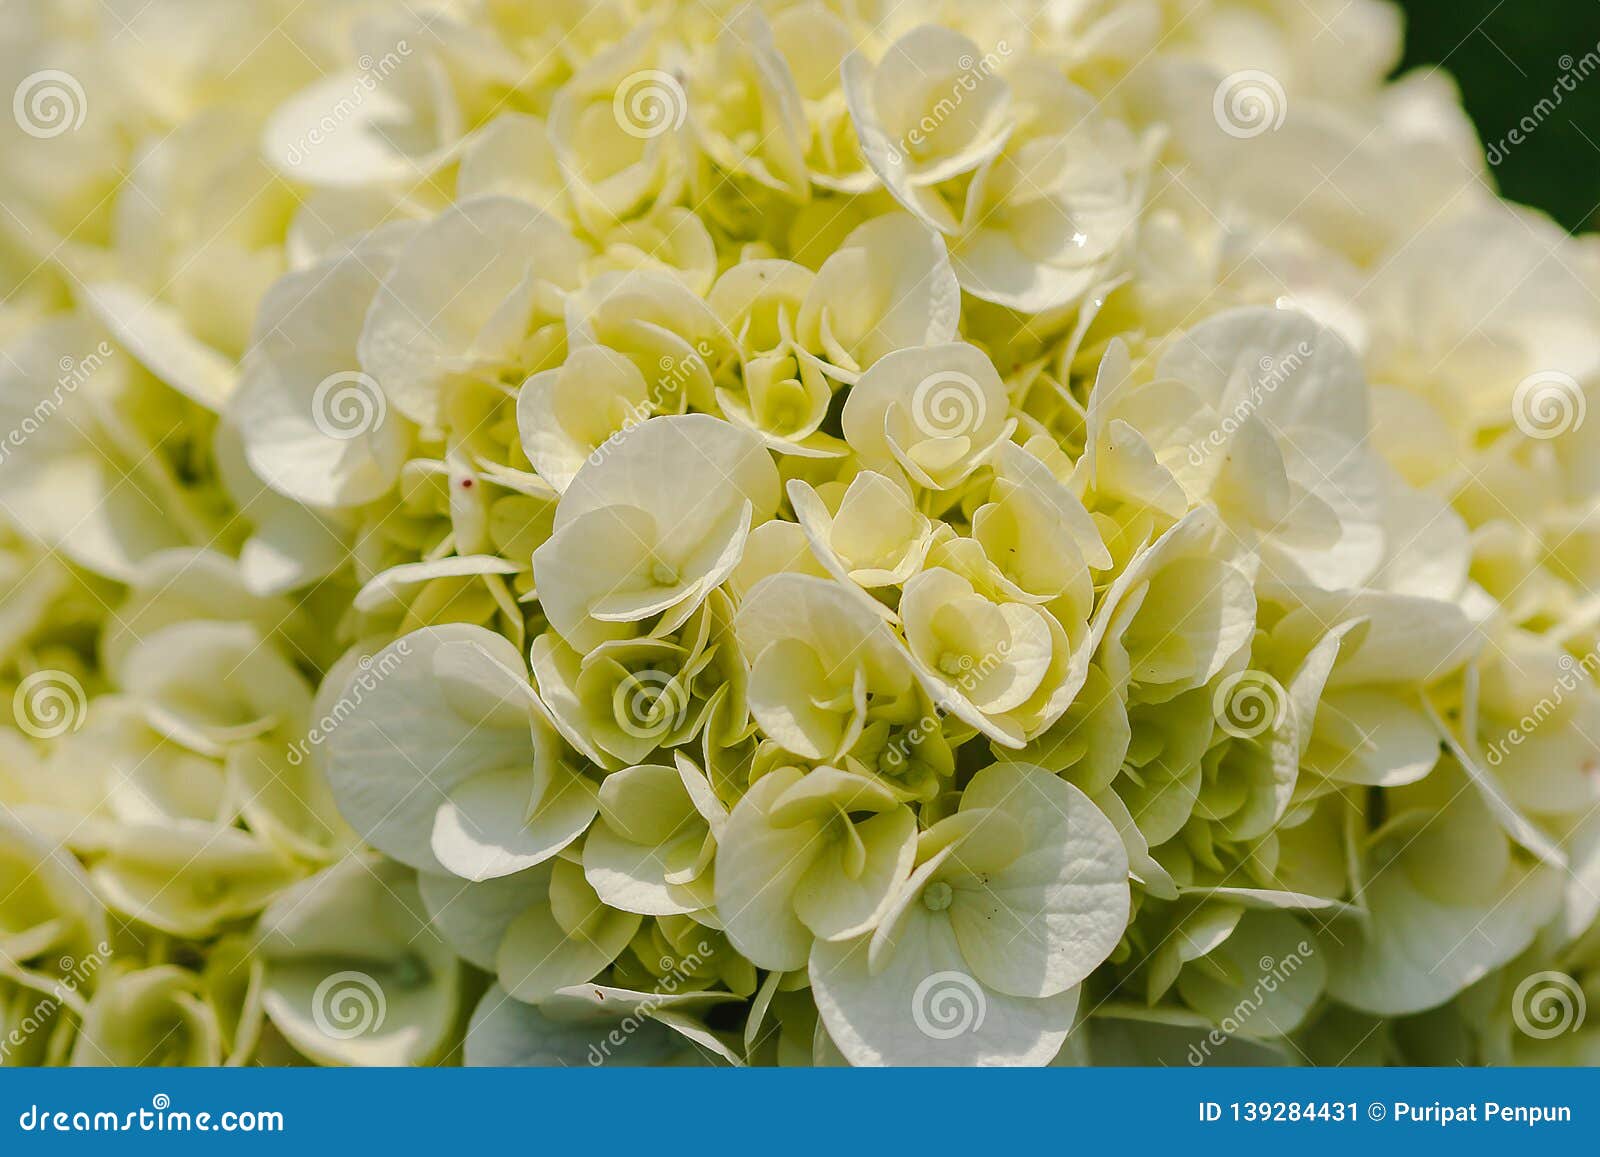 Hortensia Amarilla Que Florece En Naturaleza Imagen de archivo - Imagen de  fondo, floral: 139284431